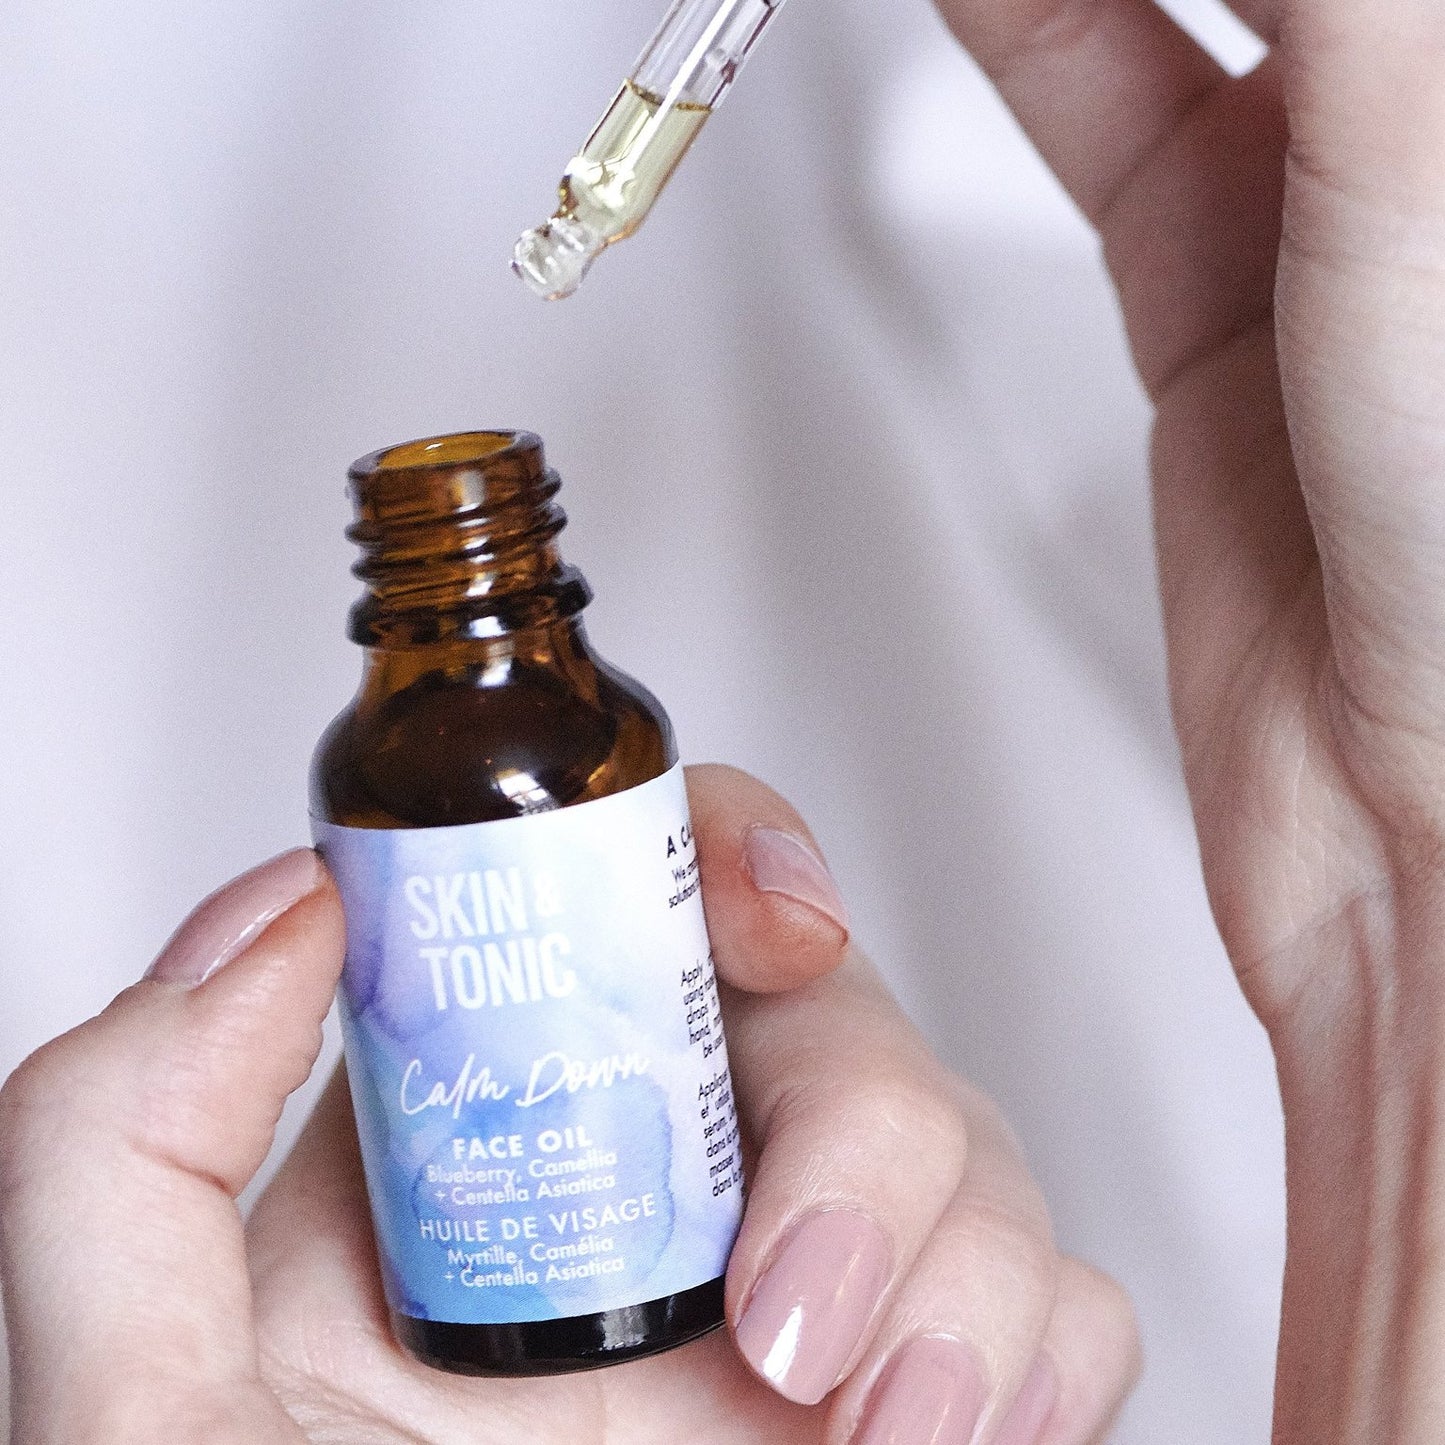 Skin & Tonic - Calm Down Face Oil